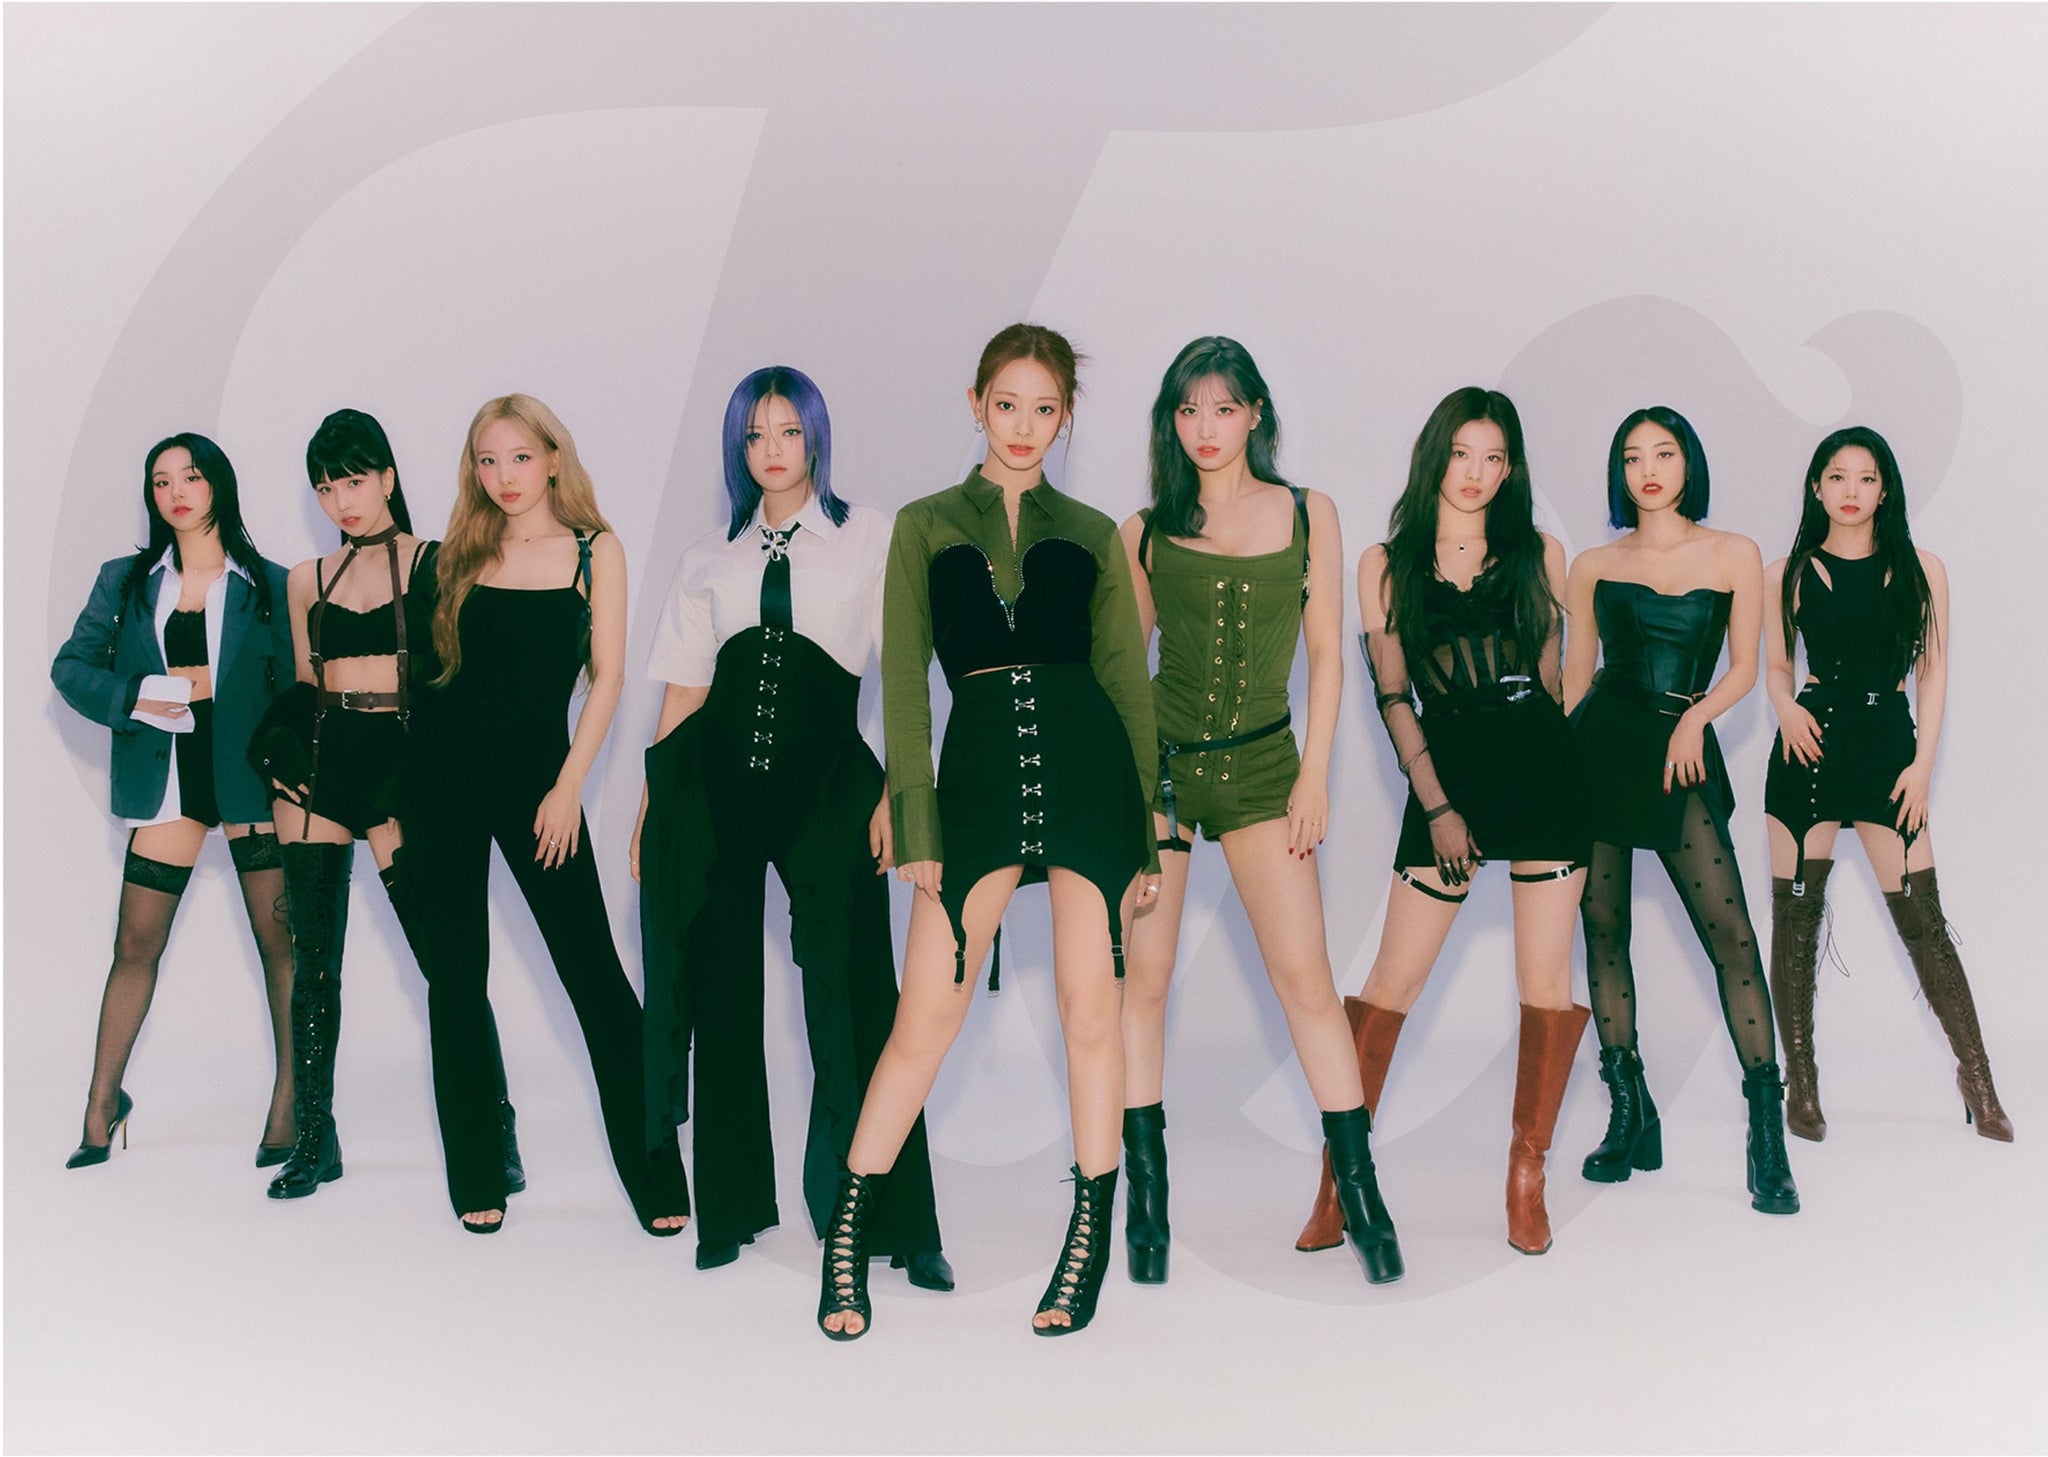 TWICE, "Kpop Girl Group Only" US Album Top 10